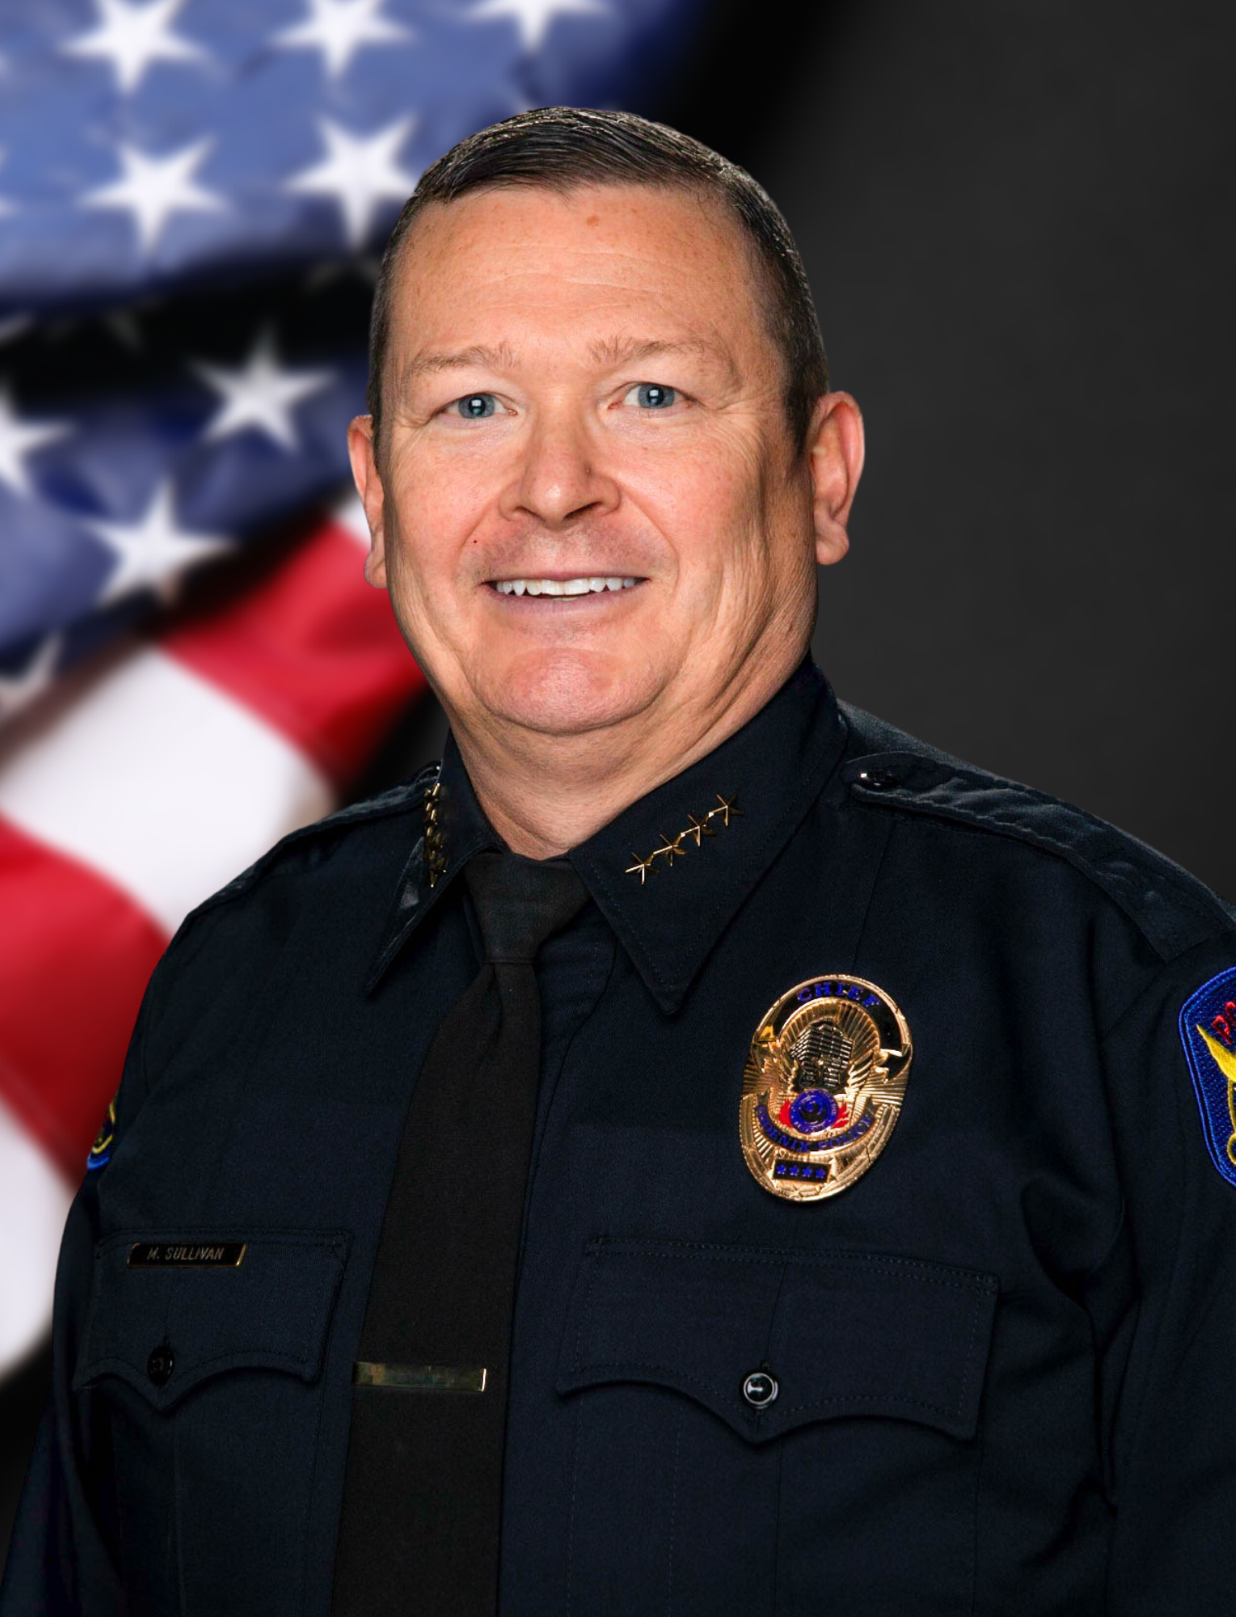 Phoenix Police Chief Michael Sullivan